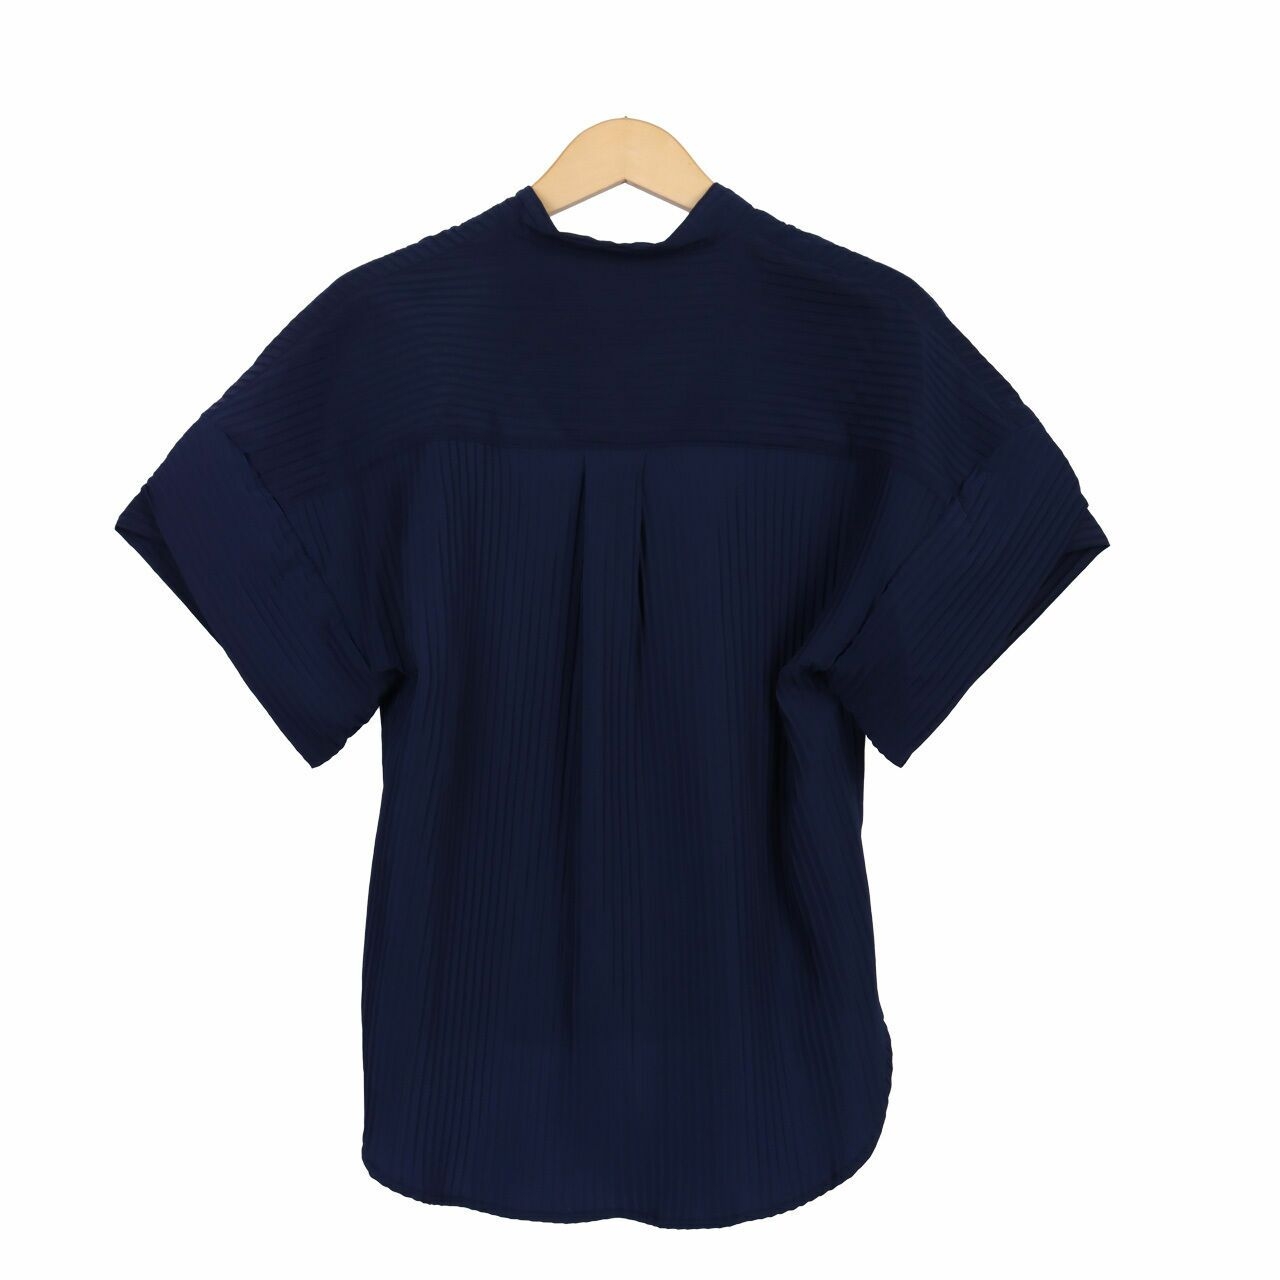 Luna Habit Navy Shirt